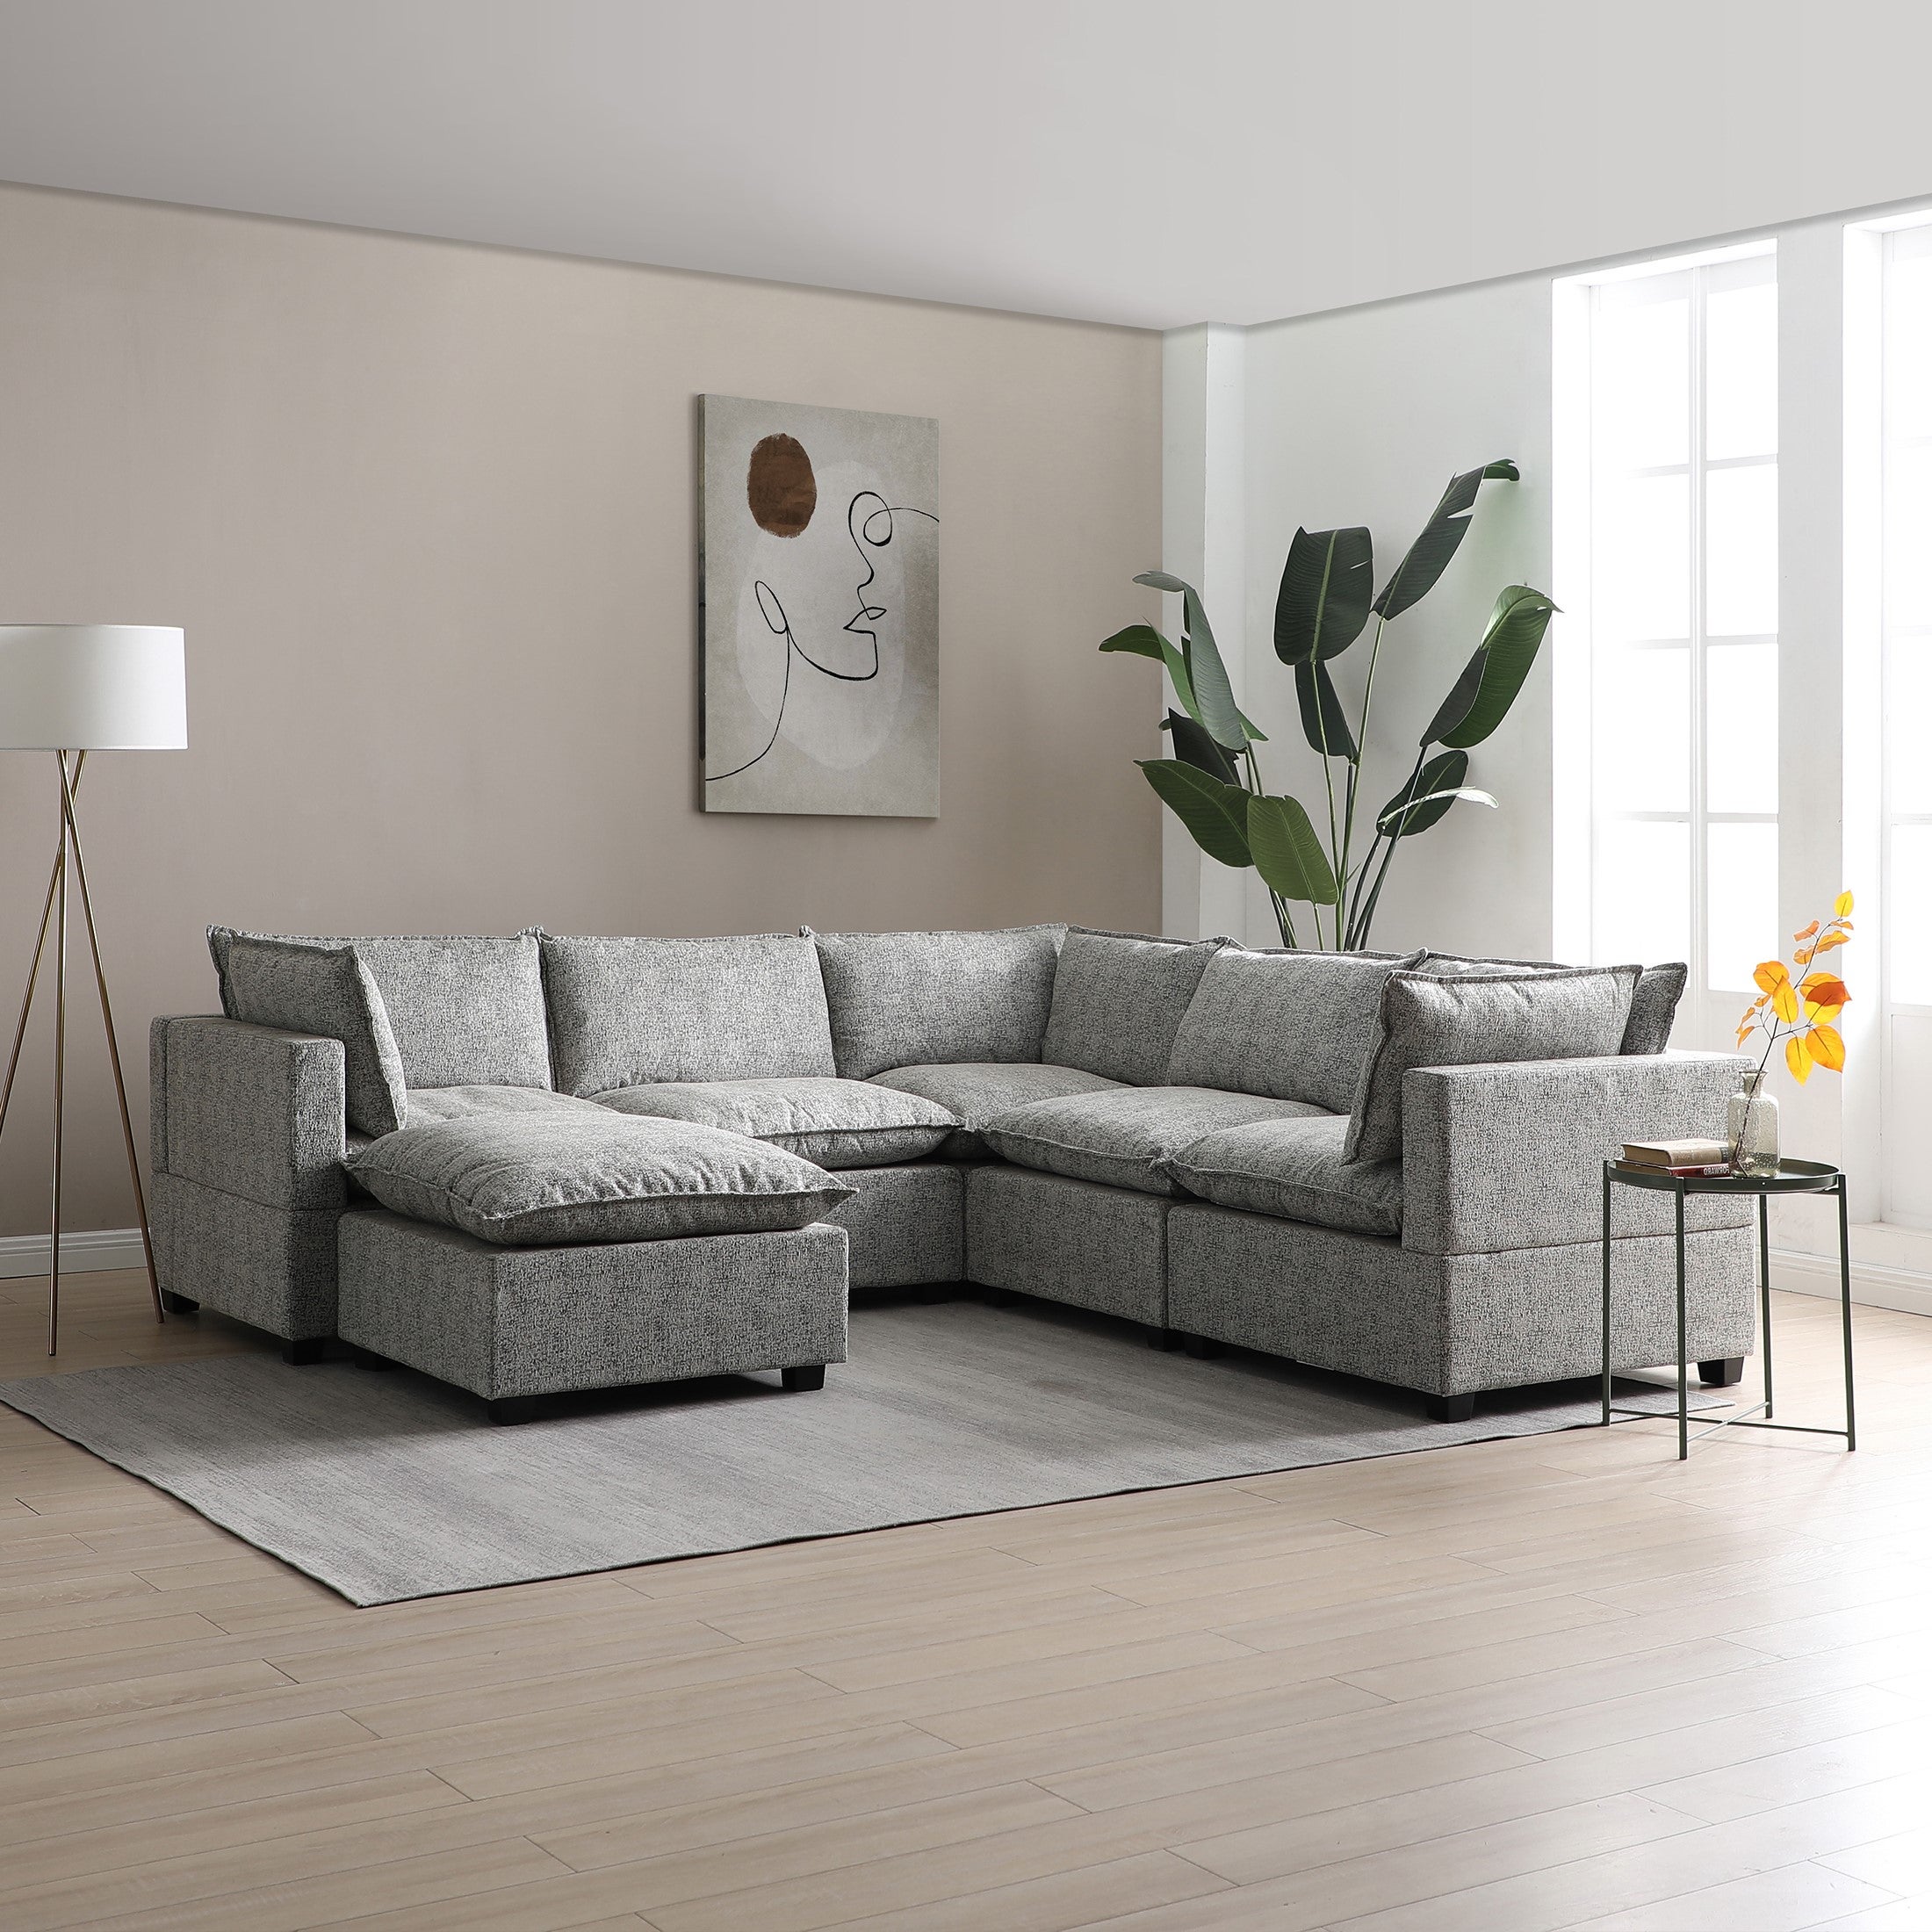 Moda Corner Modular Sofa with Chaise, Light Grey Boucle